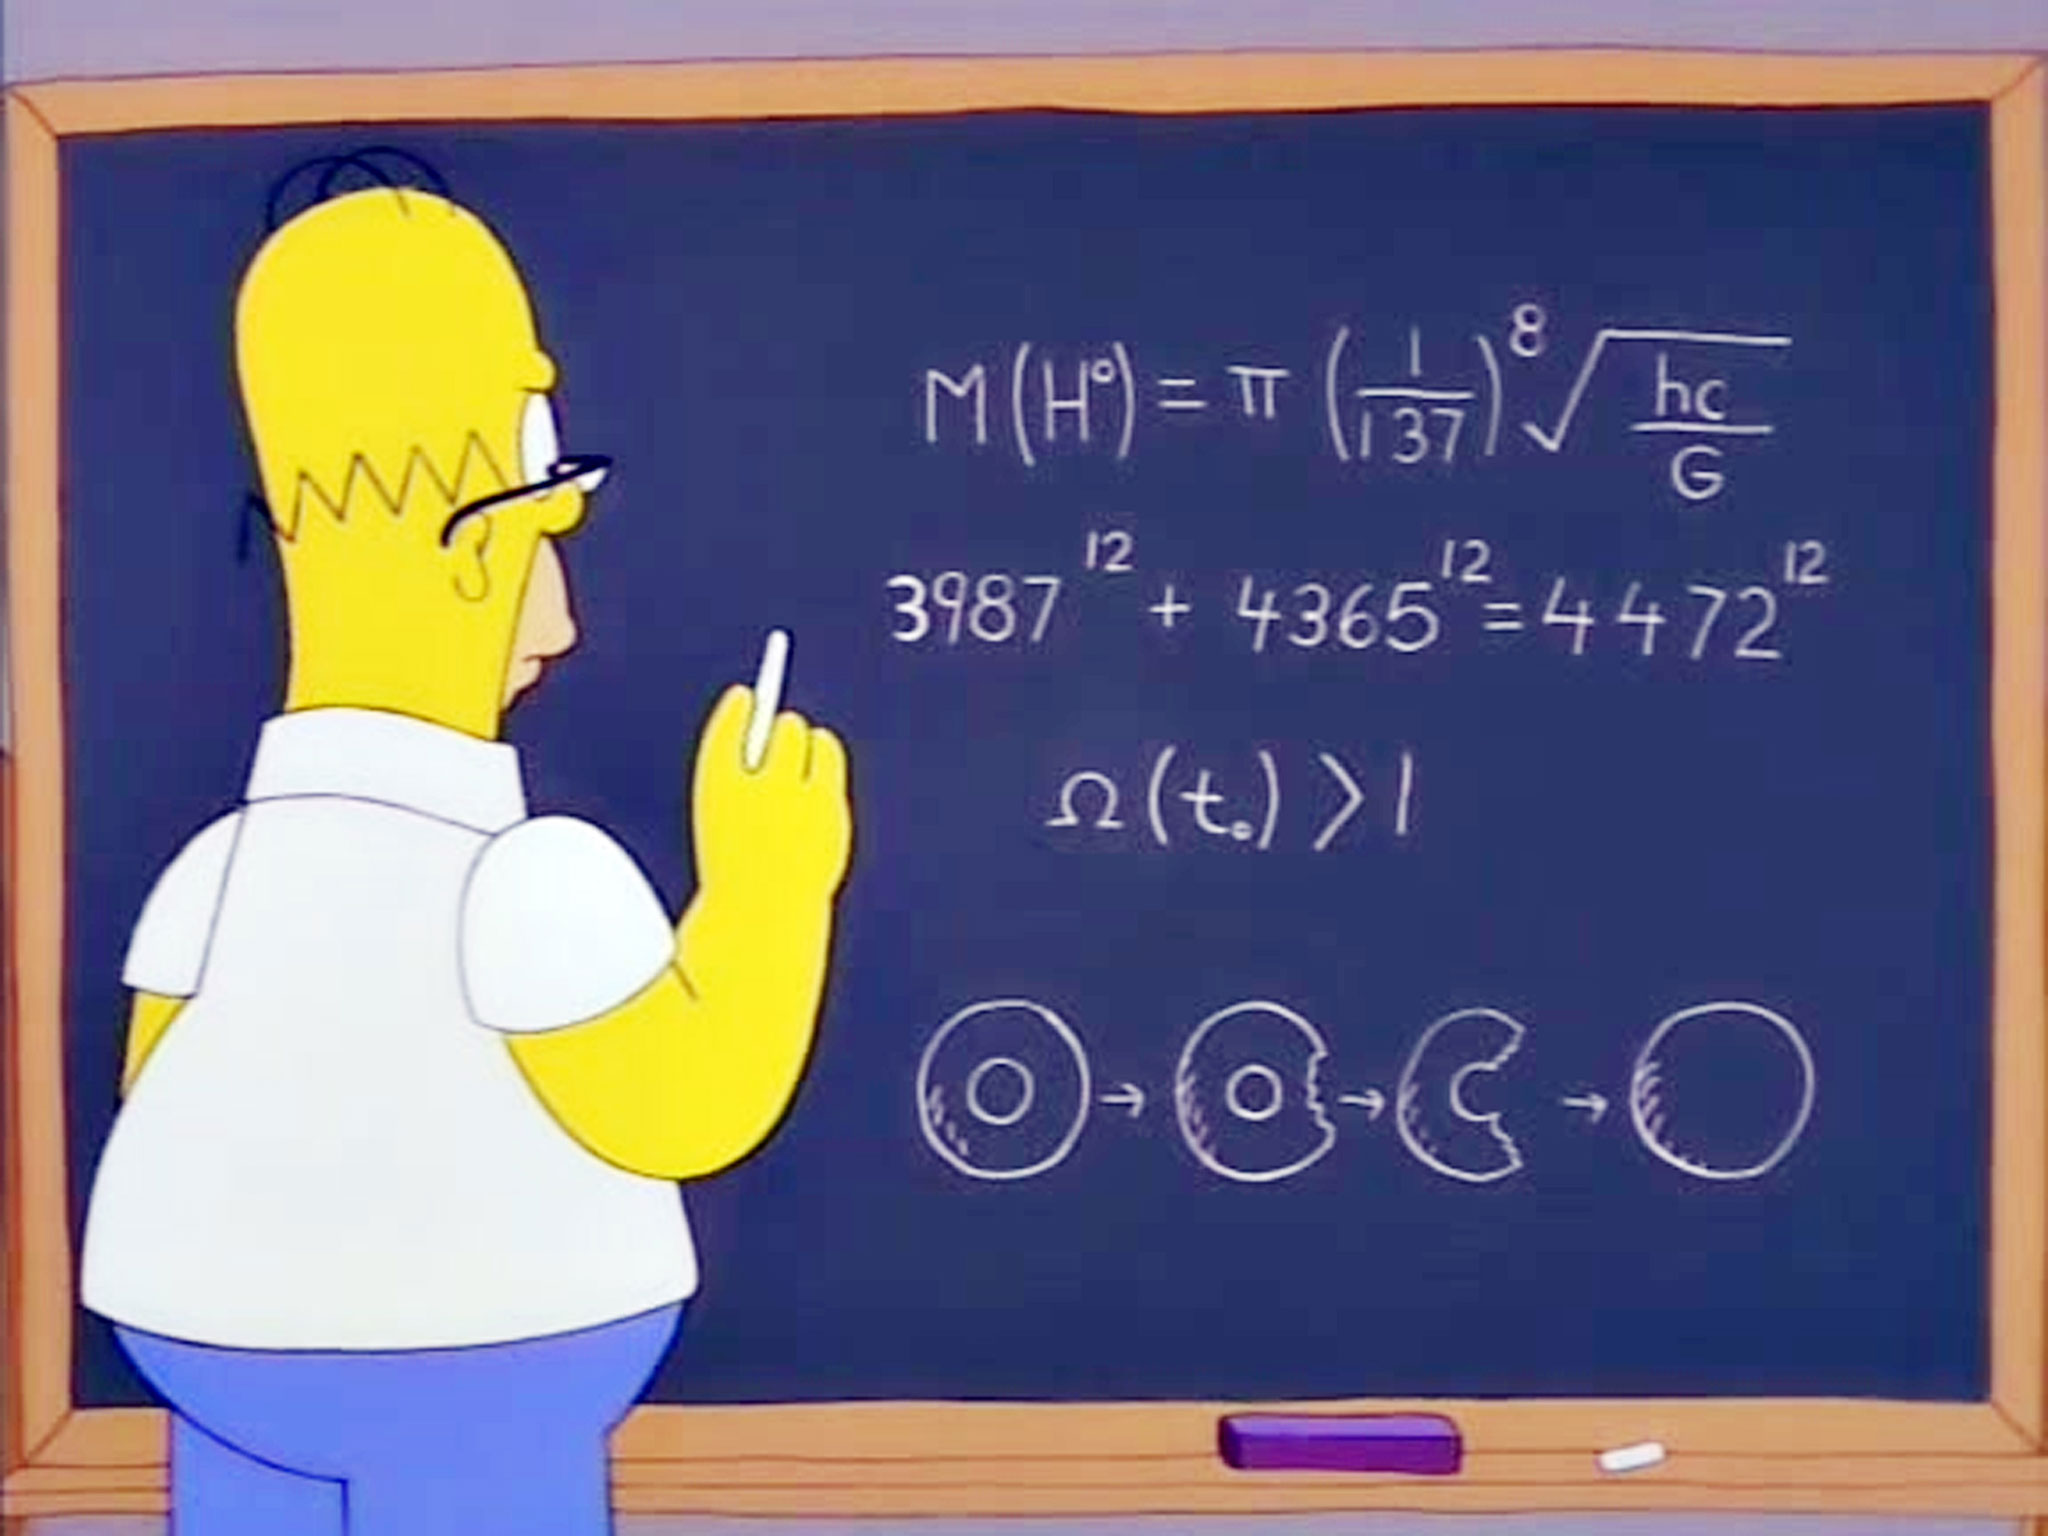 Массу бозона Хиггса просчитал Гомер Симпсон 10 лет назад - 2